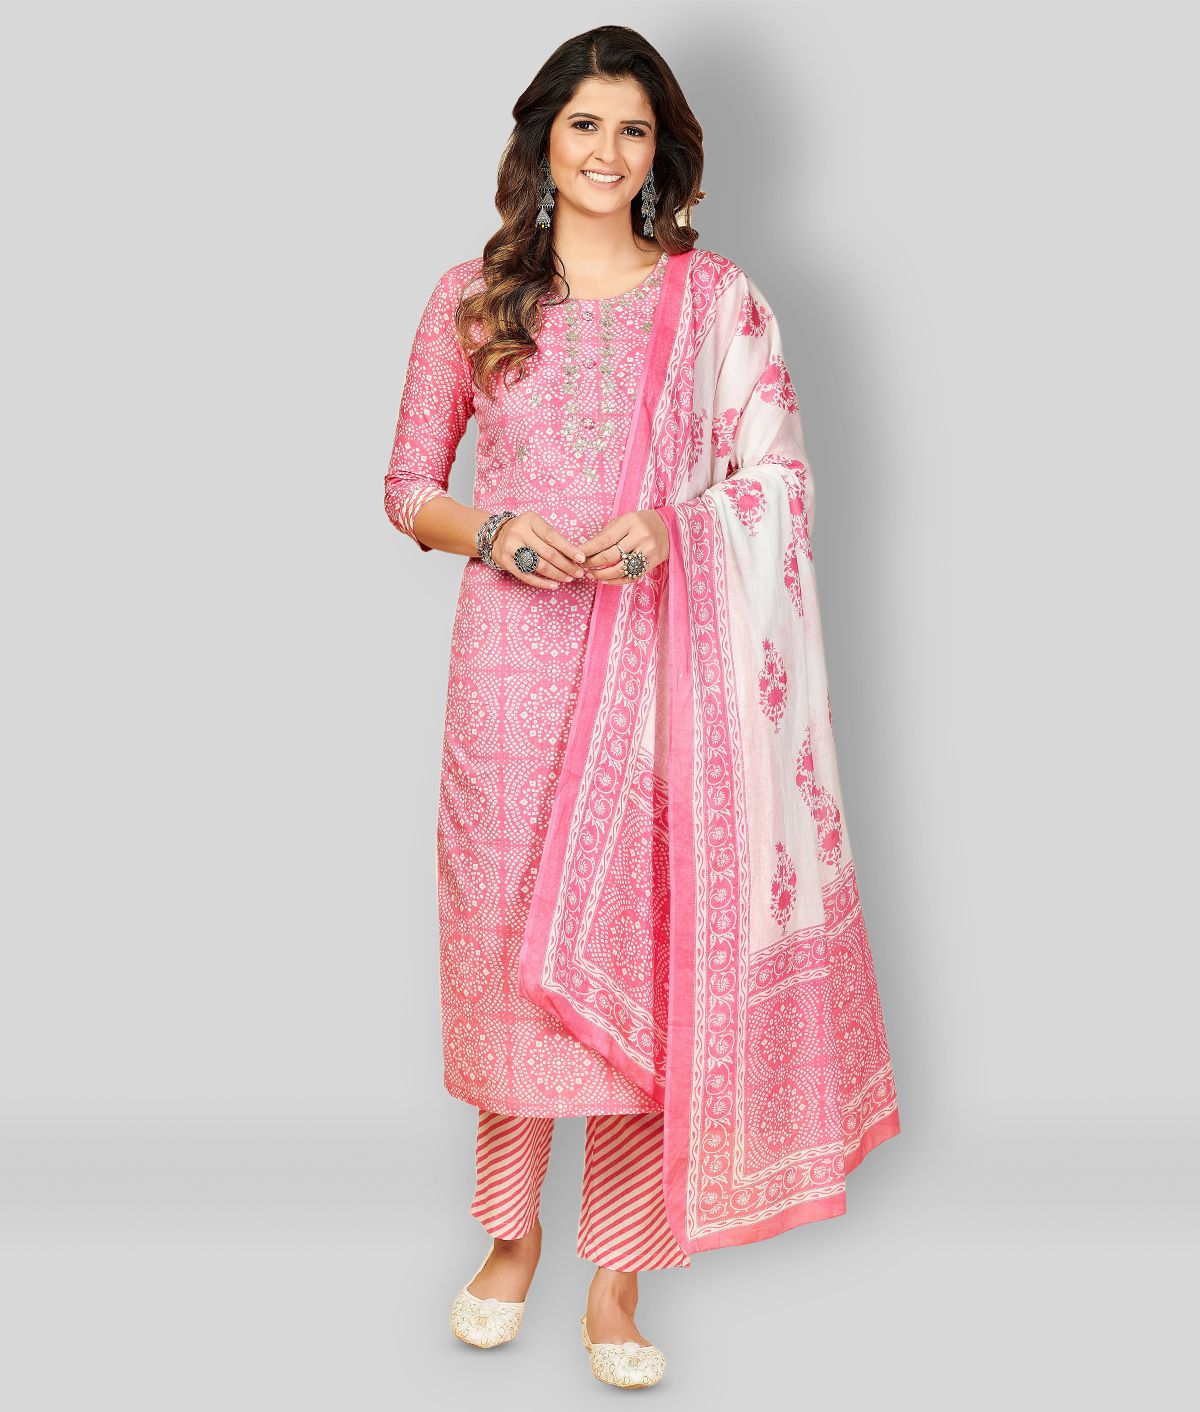     			Vbuyz - Multicolor Straight Cotton Women's Stitched Salwar Suit ( Pack of 1 )